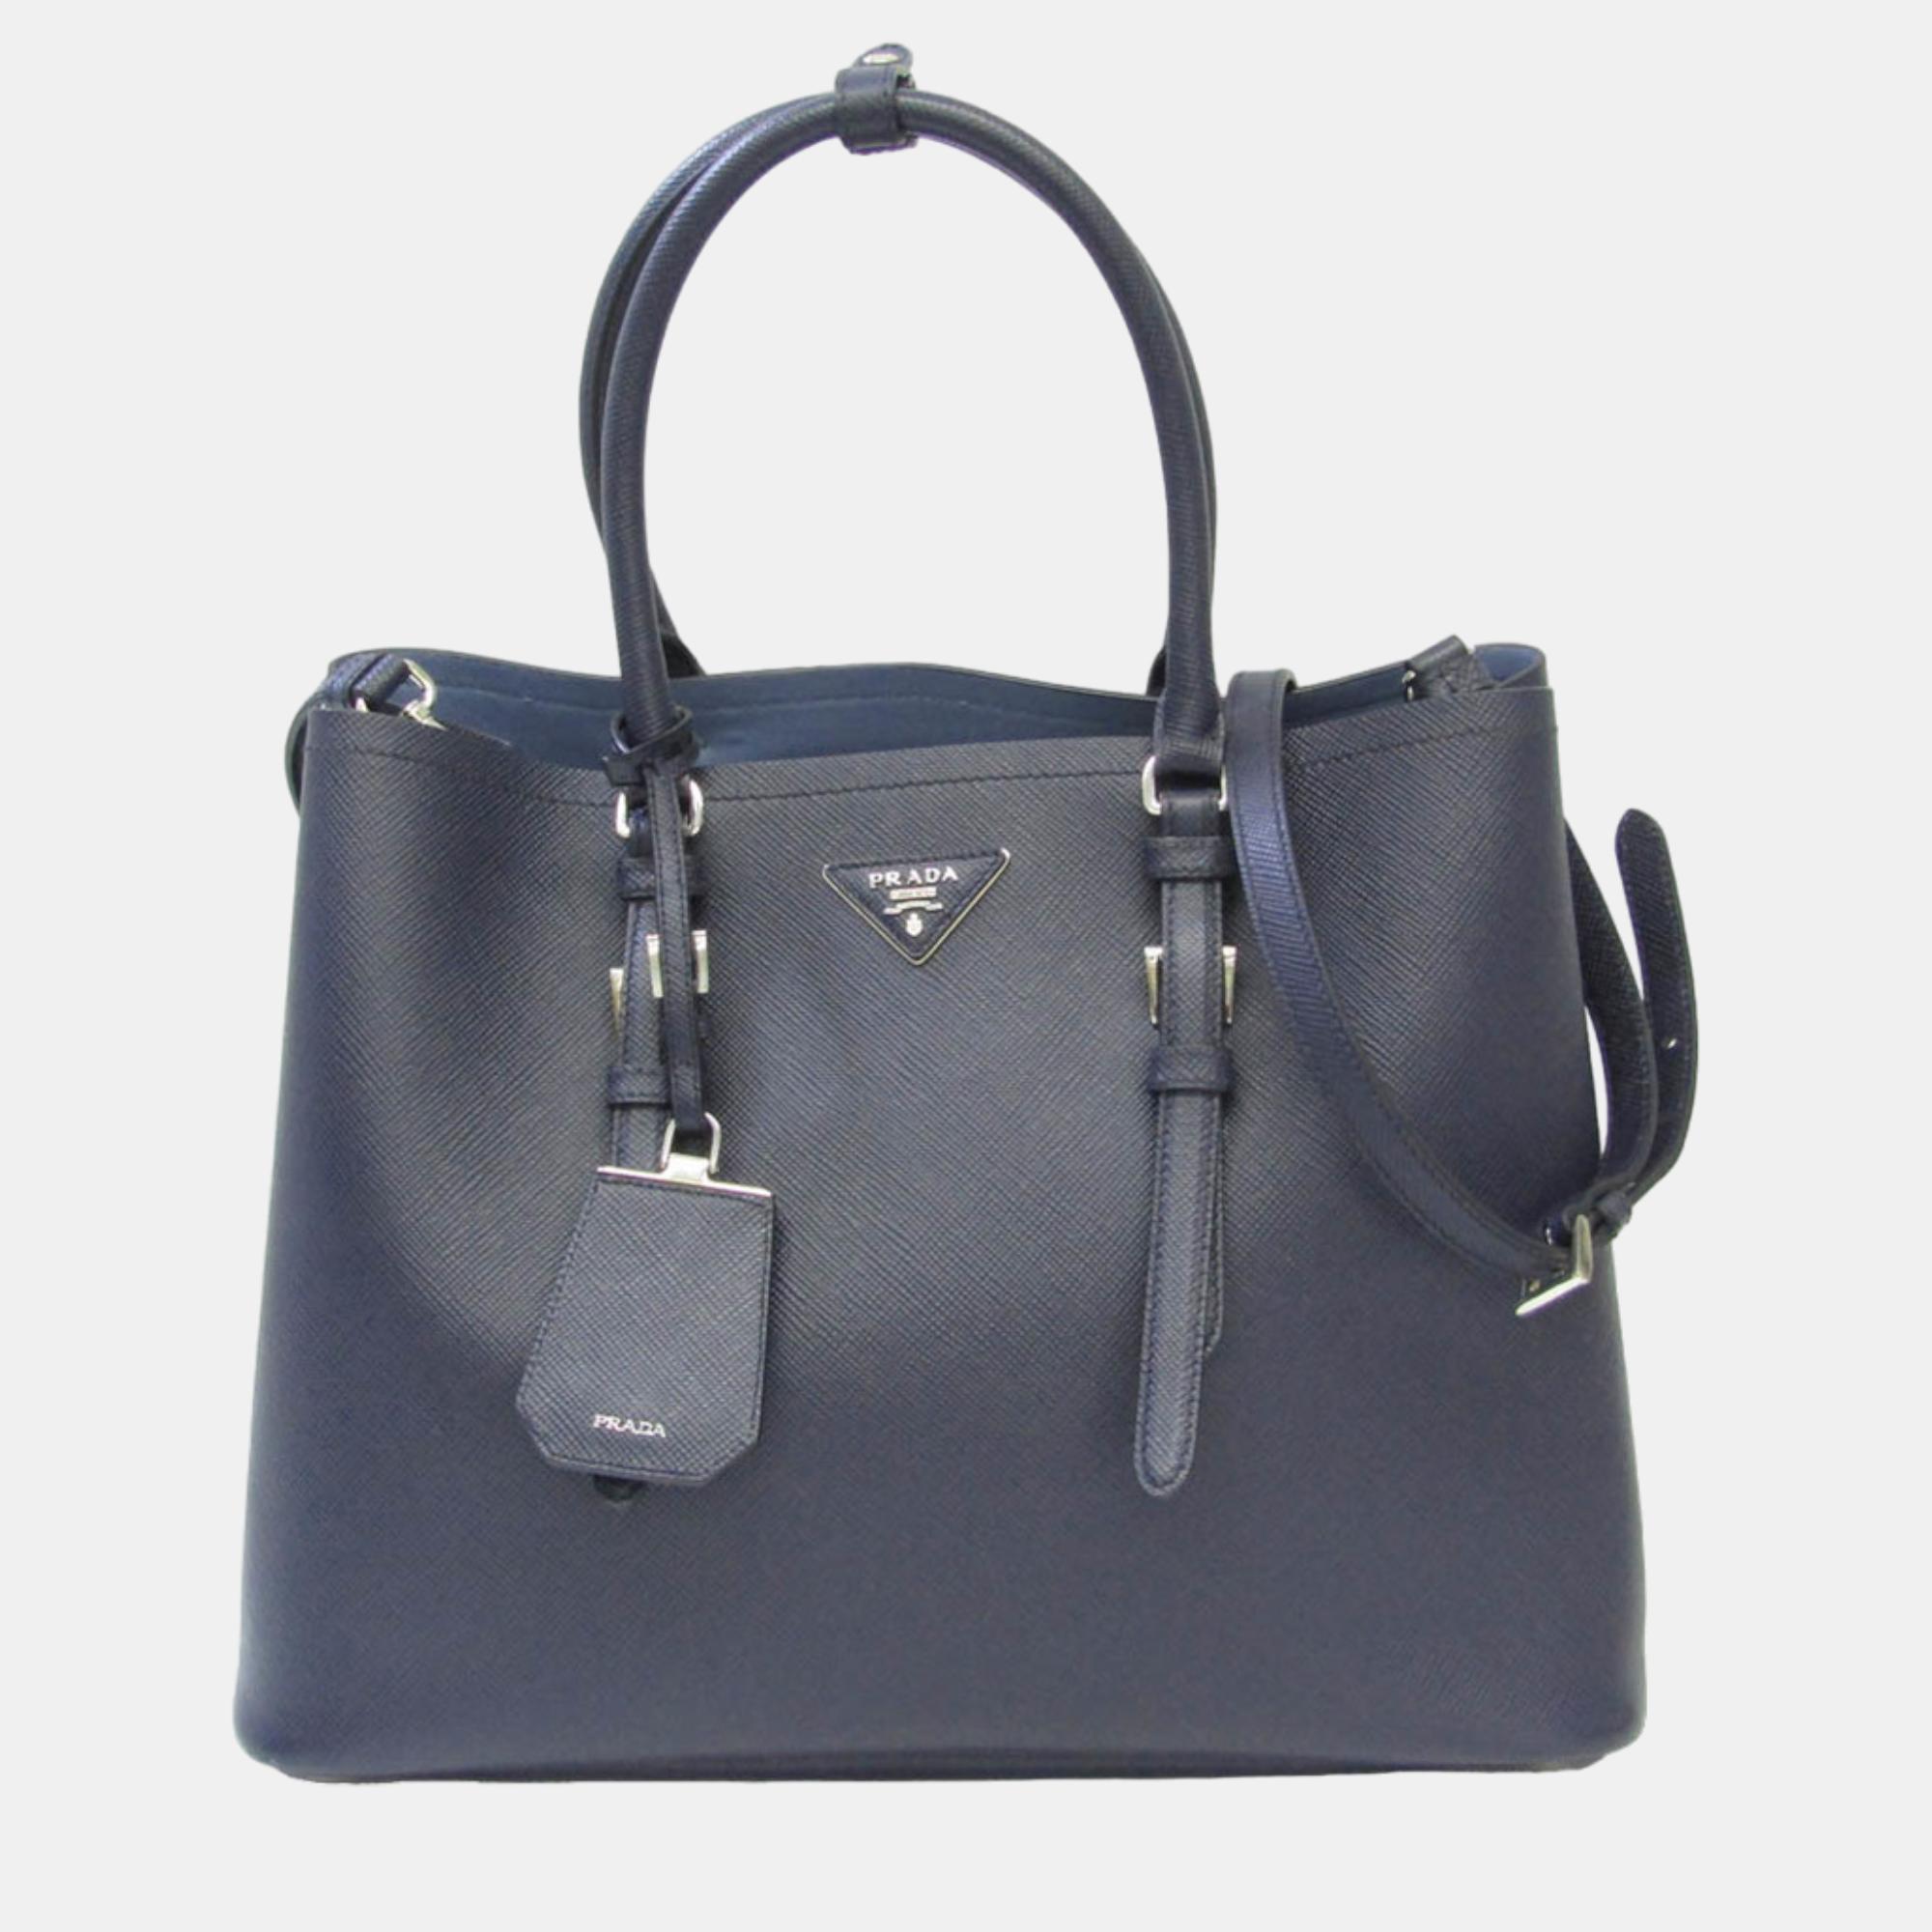 

Prada Blue Leather Saffiano Cuir Double Tote Bag, Navy blue